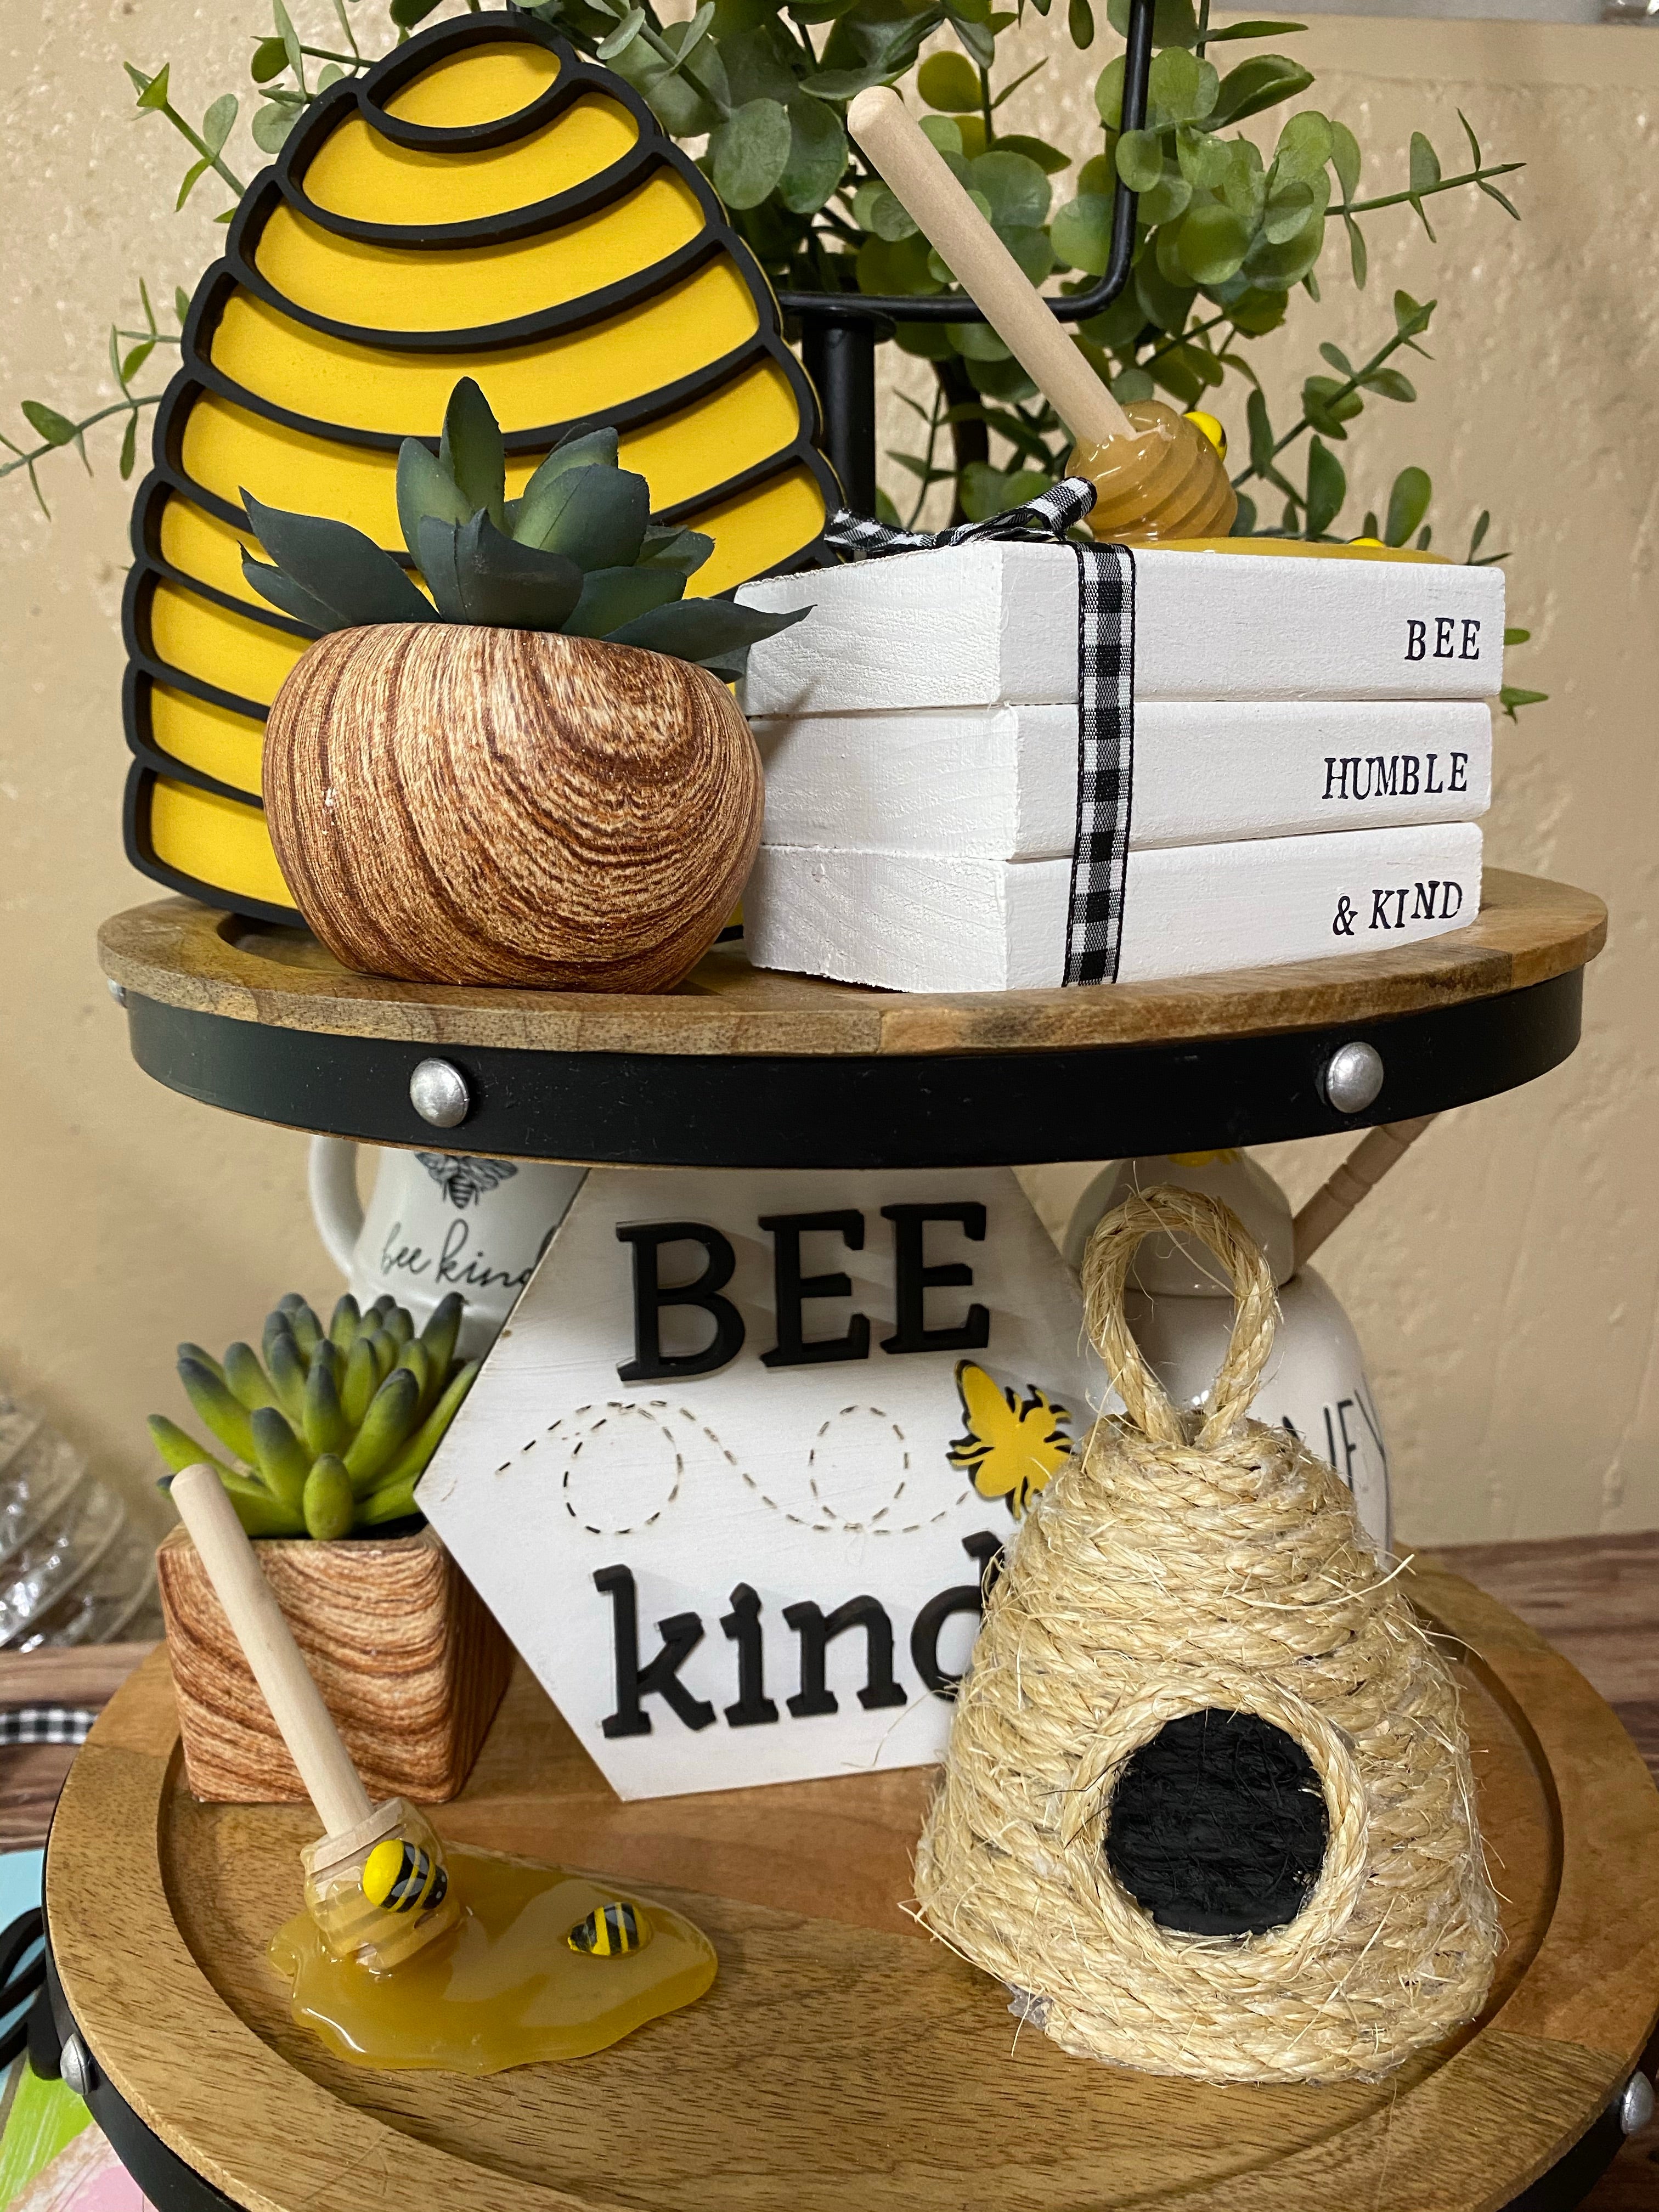 Black White & Yellow Honeybee /bumble Bee Tiered Tray Set 